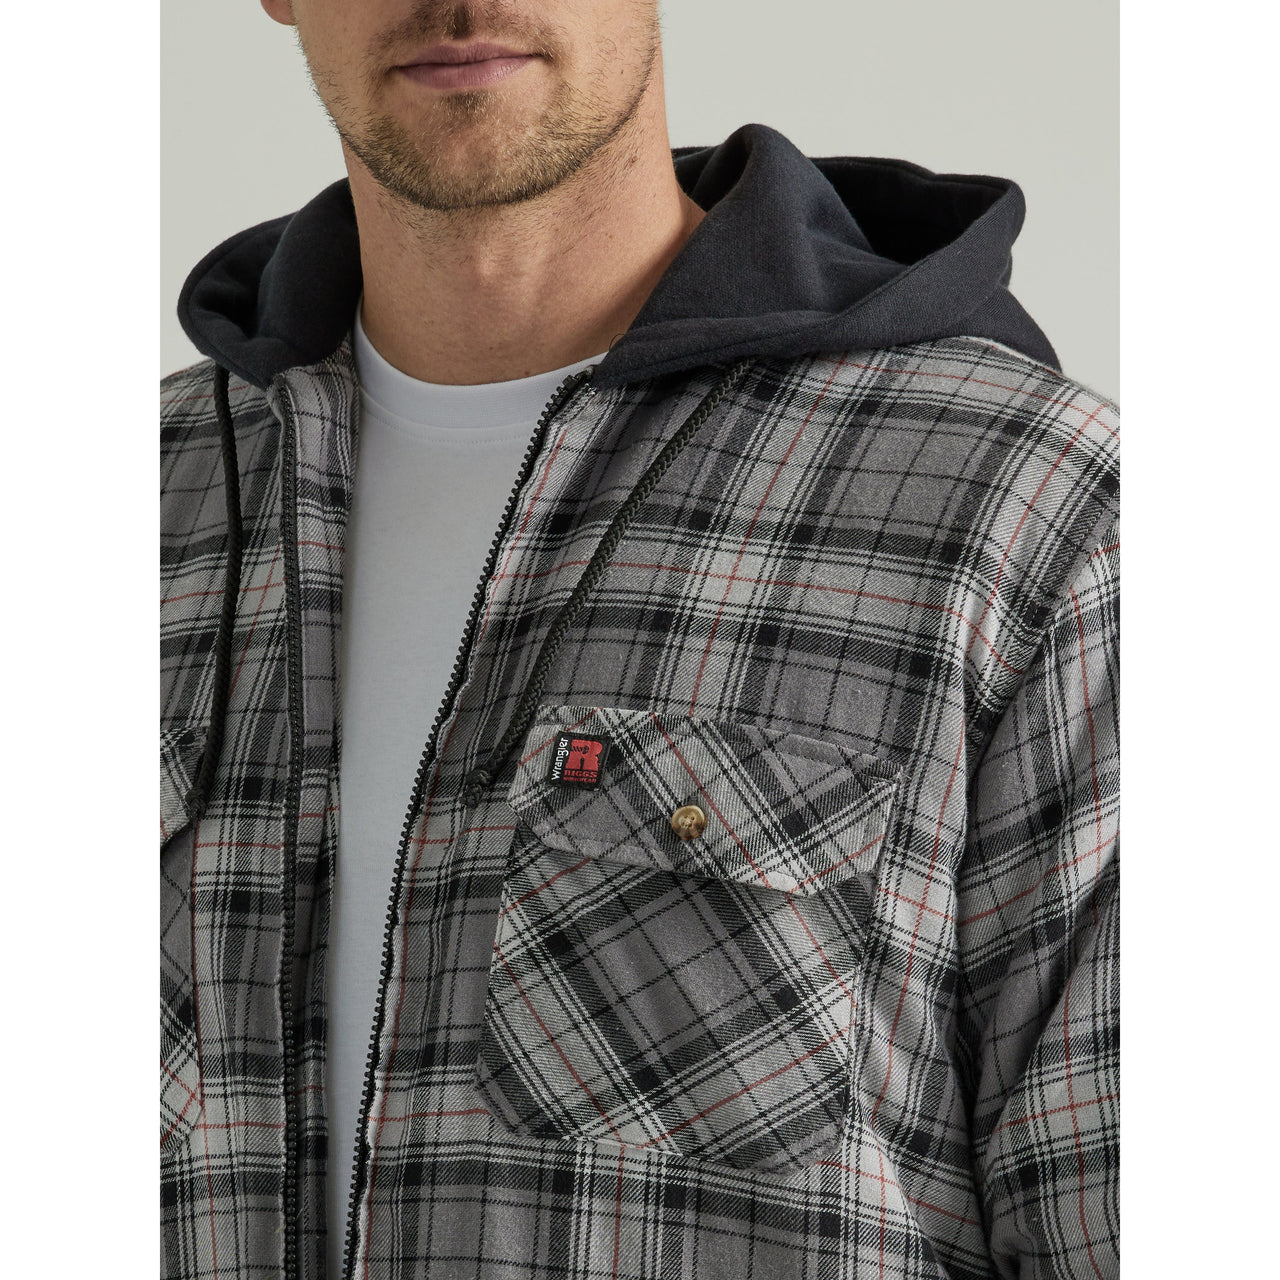 Wranglers Men's Riggs Workwear Flannel Hooded Jacket